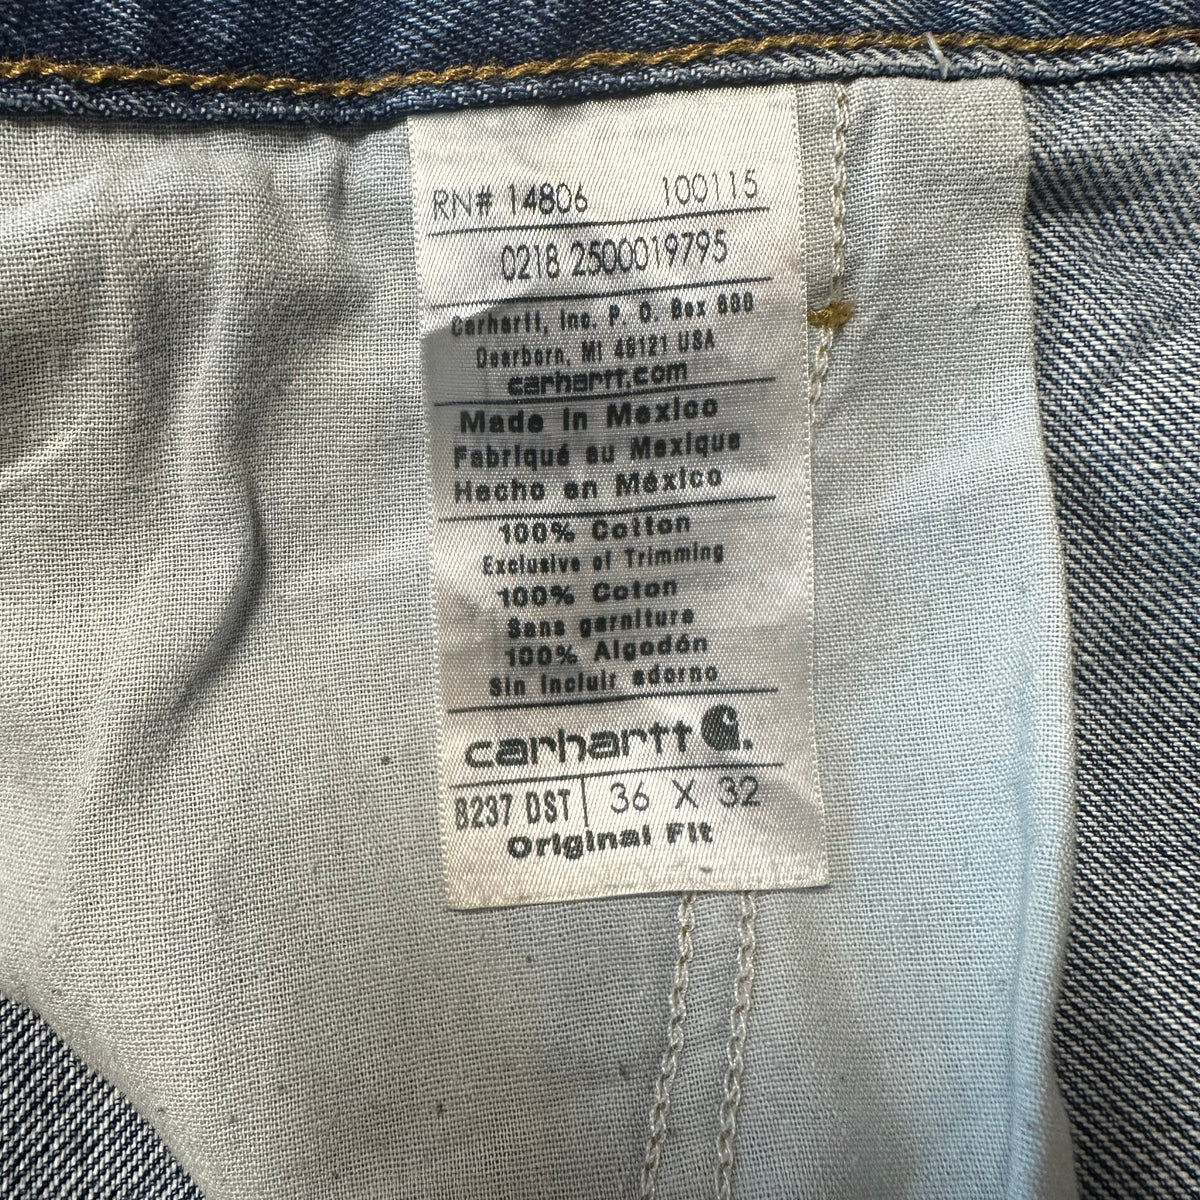 Carhartt Men’s Carpenter Blue Jeans B13 Original Fit